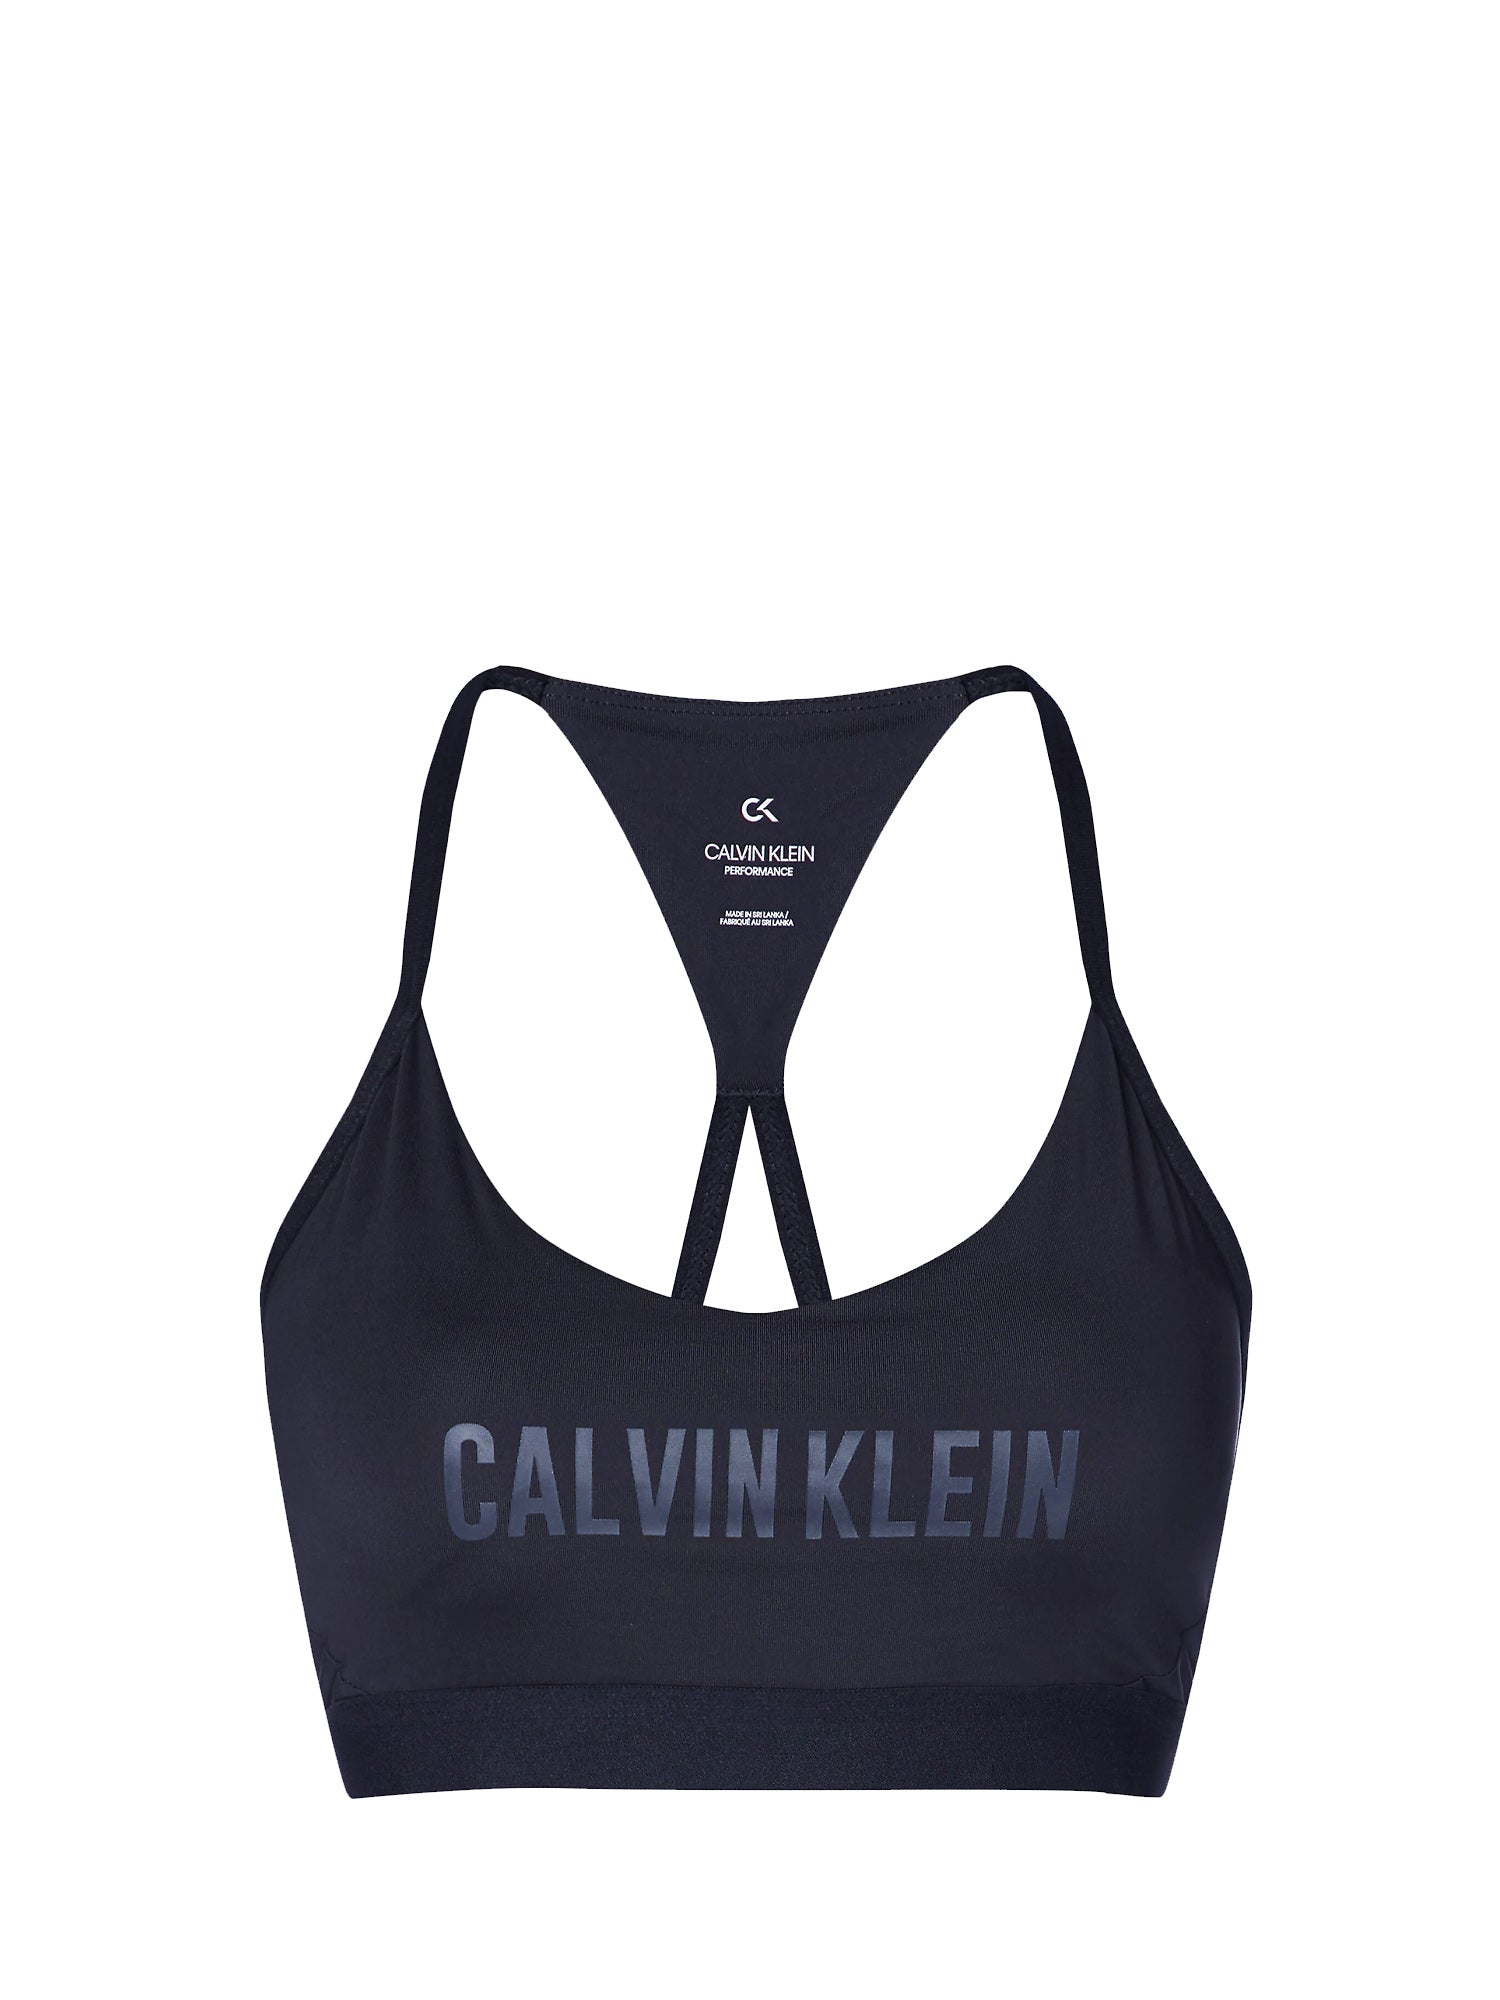 Calvin Klein Sport BH - Reggiseno Sportivo